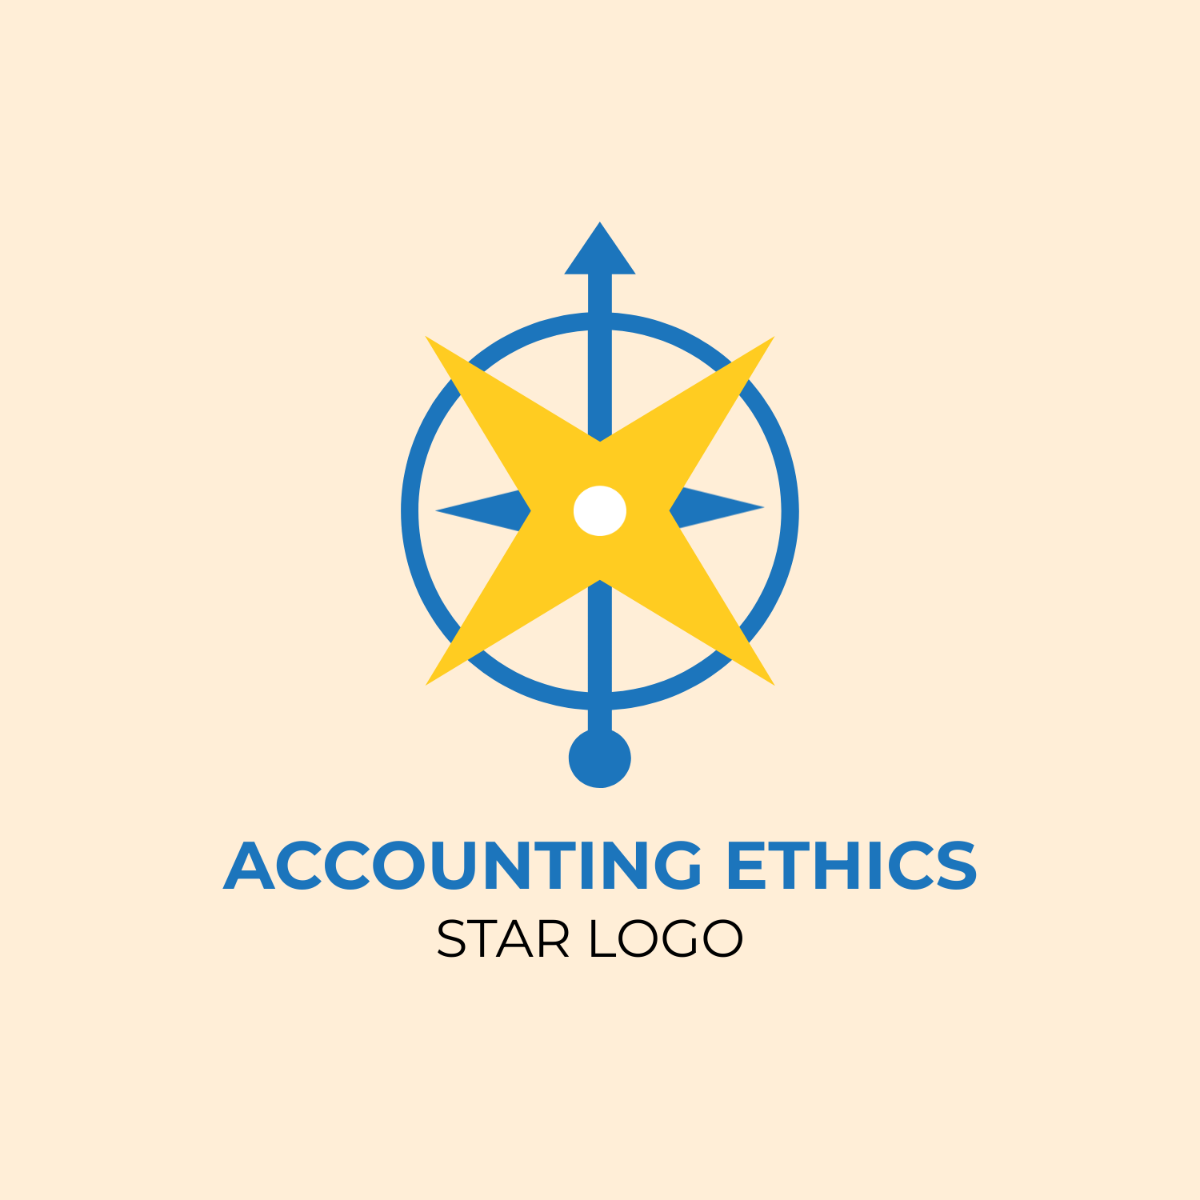 Accounting Ethics Star Logo